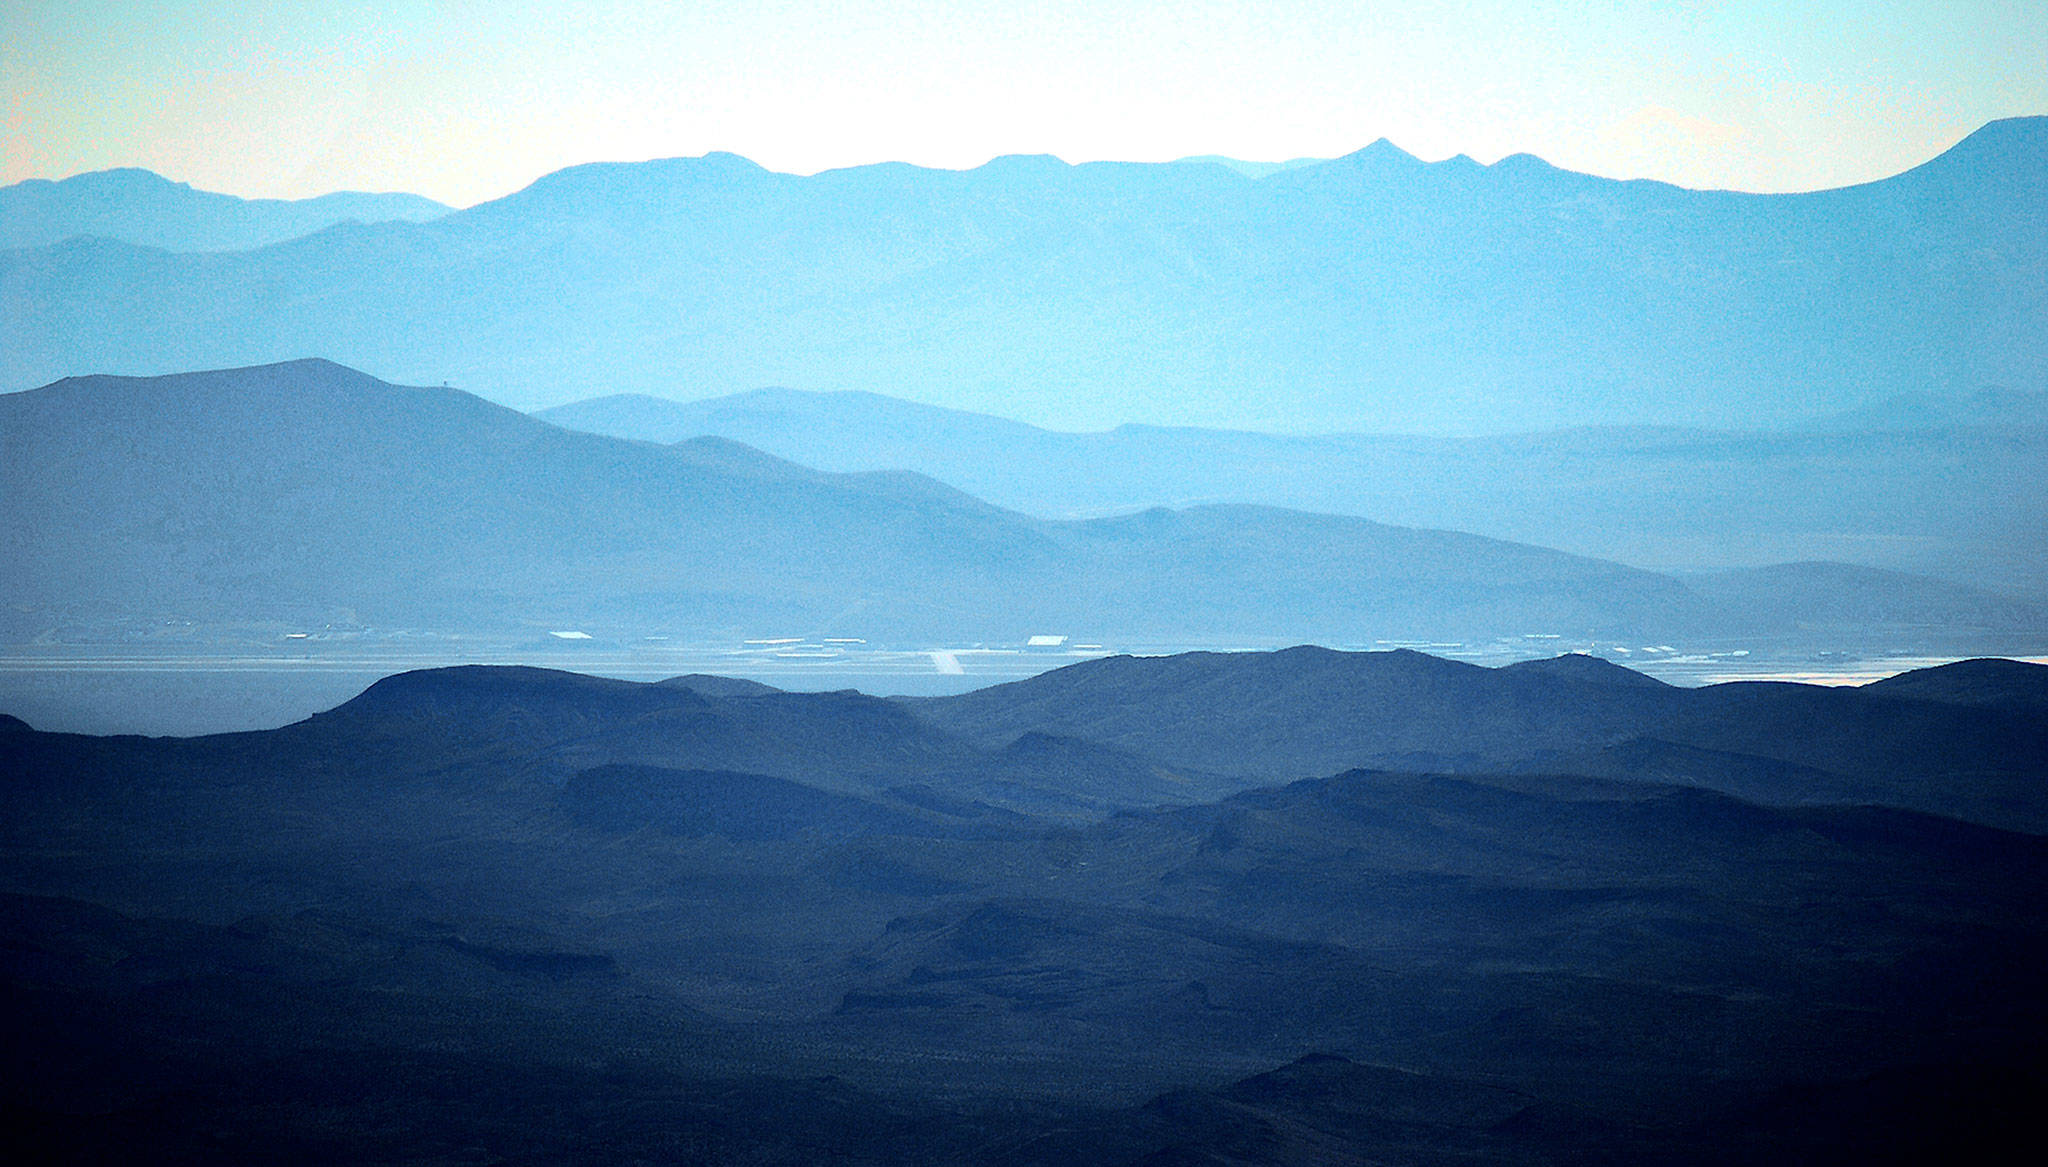 Area 51 in Nevada as seen from Tikaboo Peak. (Geckow via Wikimedia Commons)